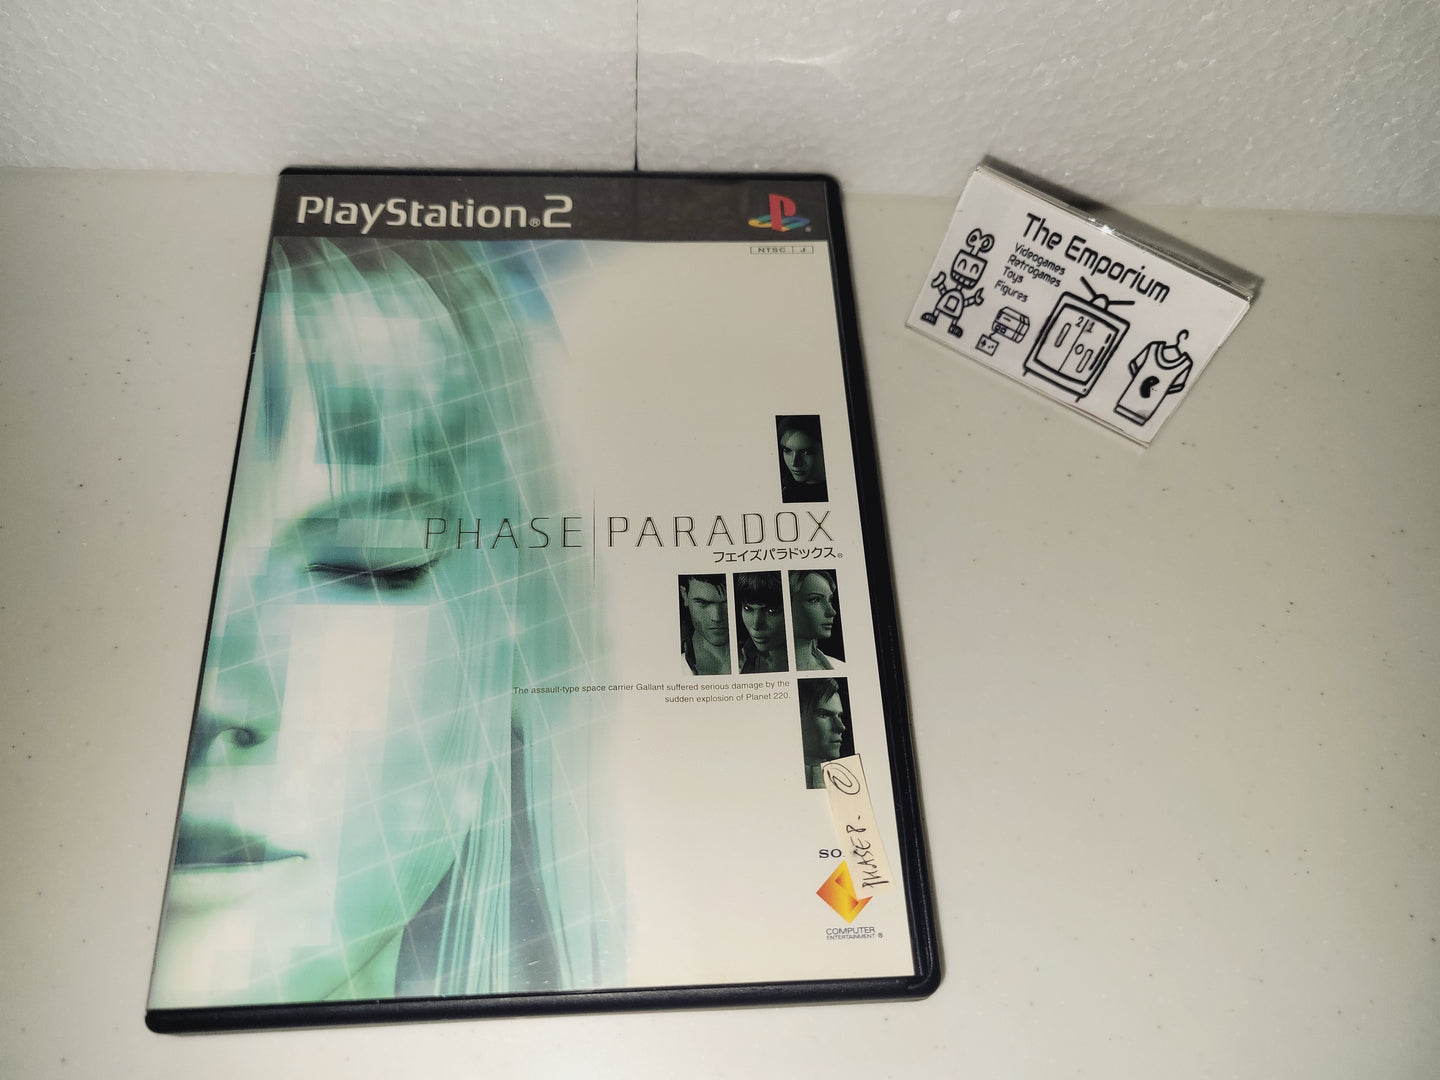 Phase Paradox - Sony playstation 2